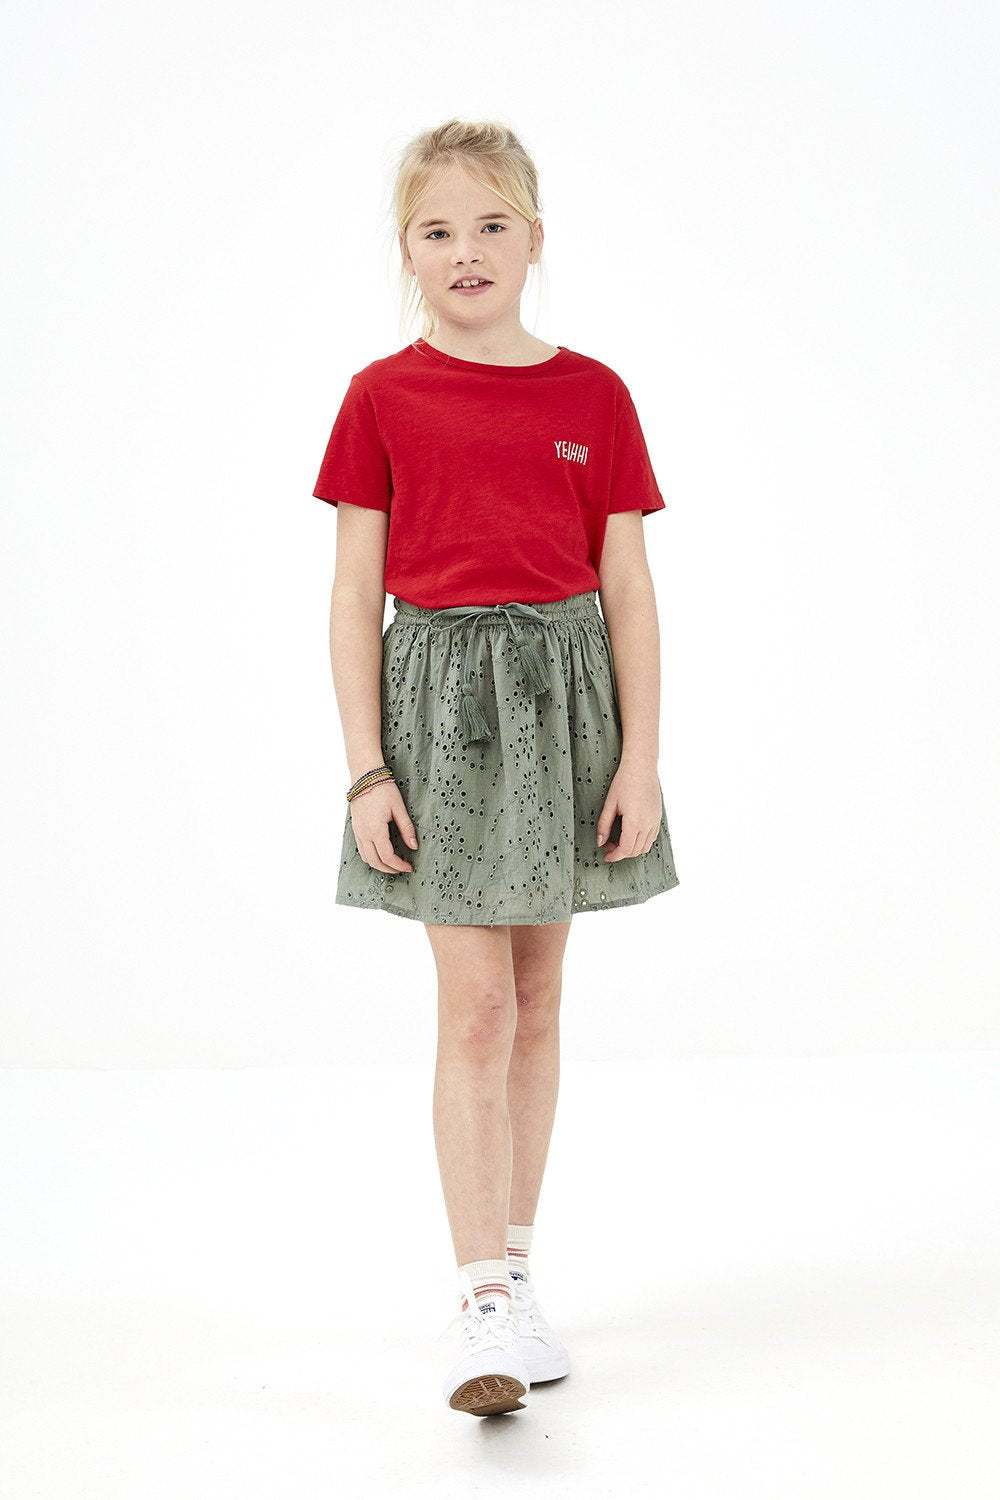 Meisjes Girls Palino Lace Skirt van By-Bar in de kleur Olive in maat 128.